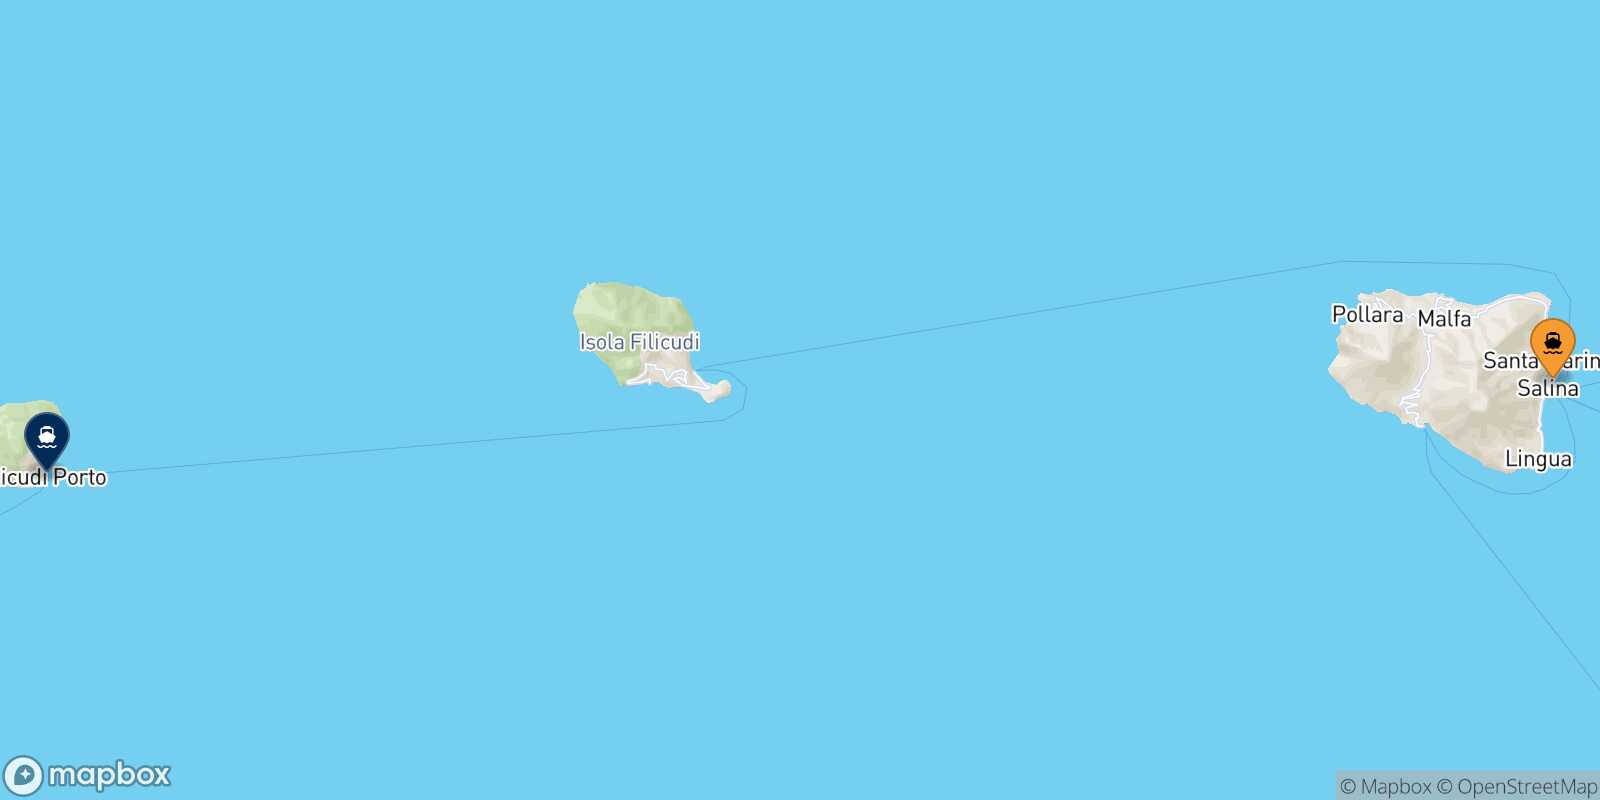 Mapa de la ruta Santa Marina (Salina) Alicudi